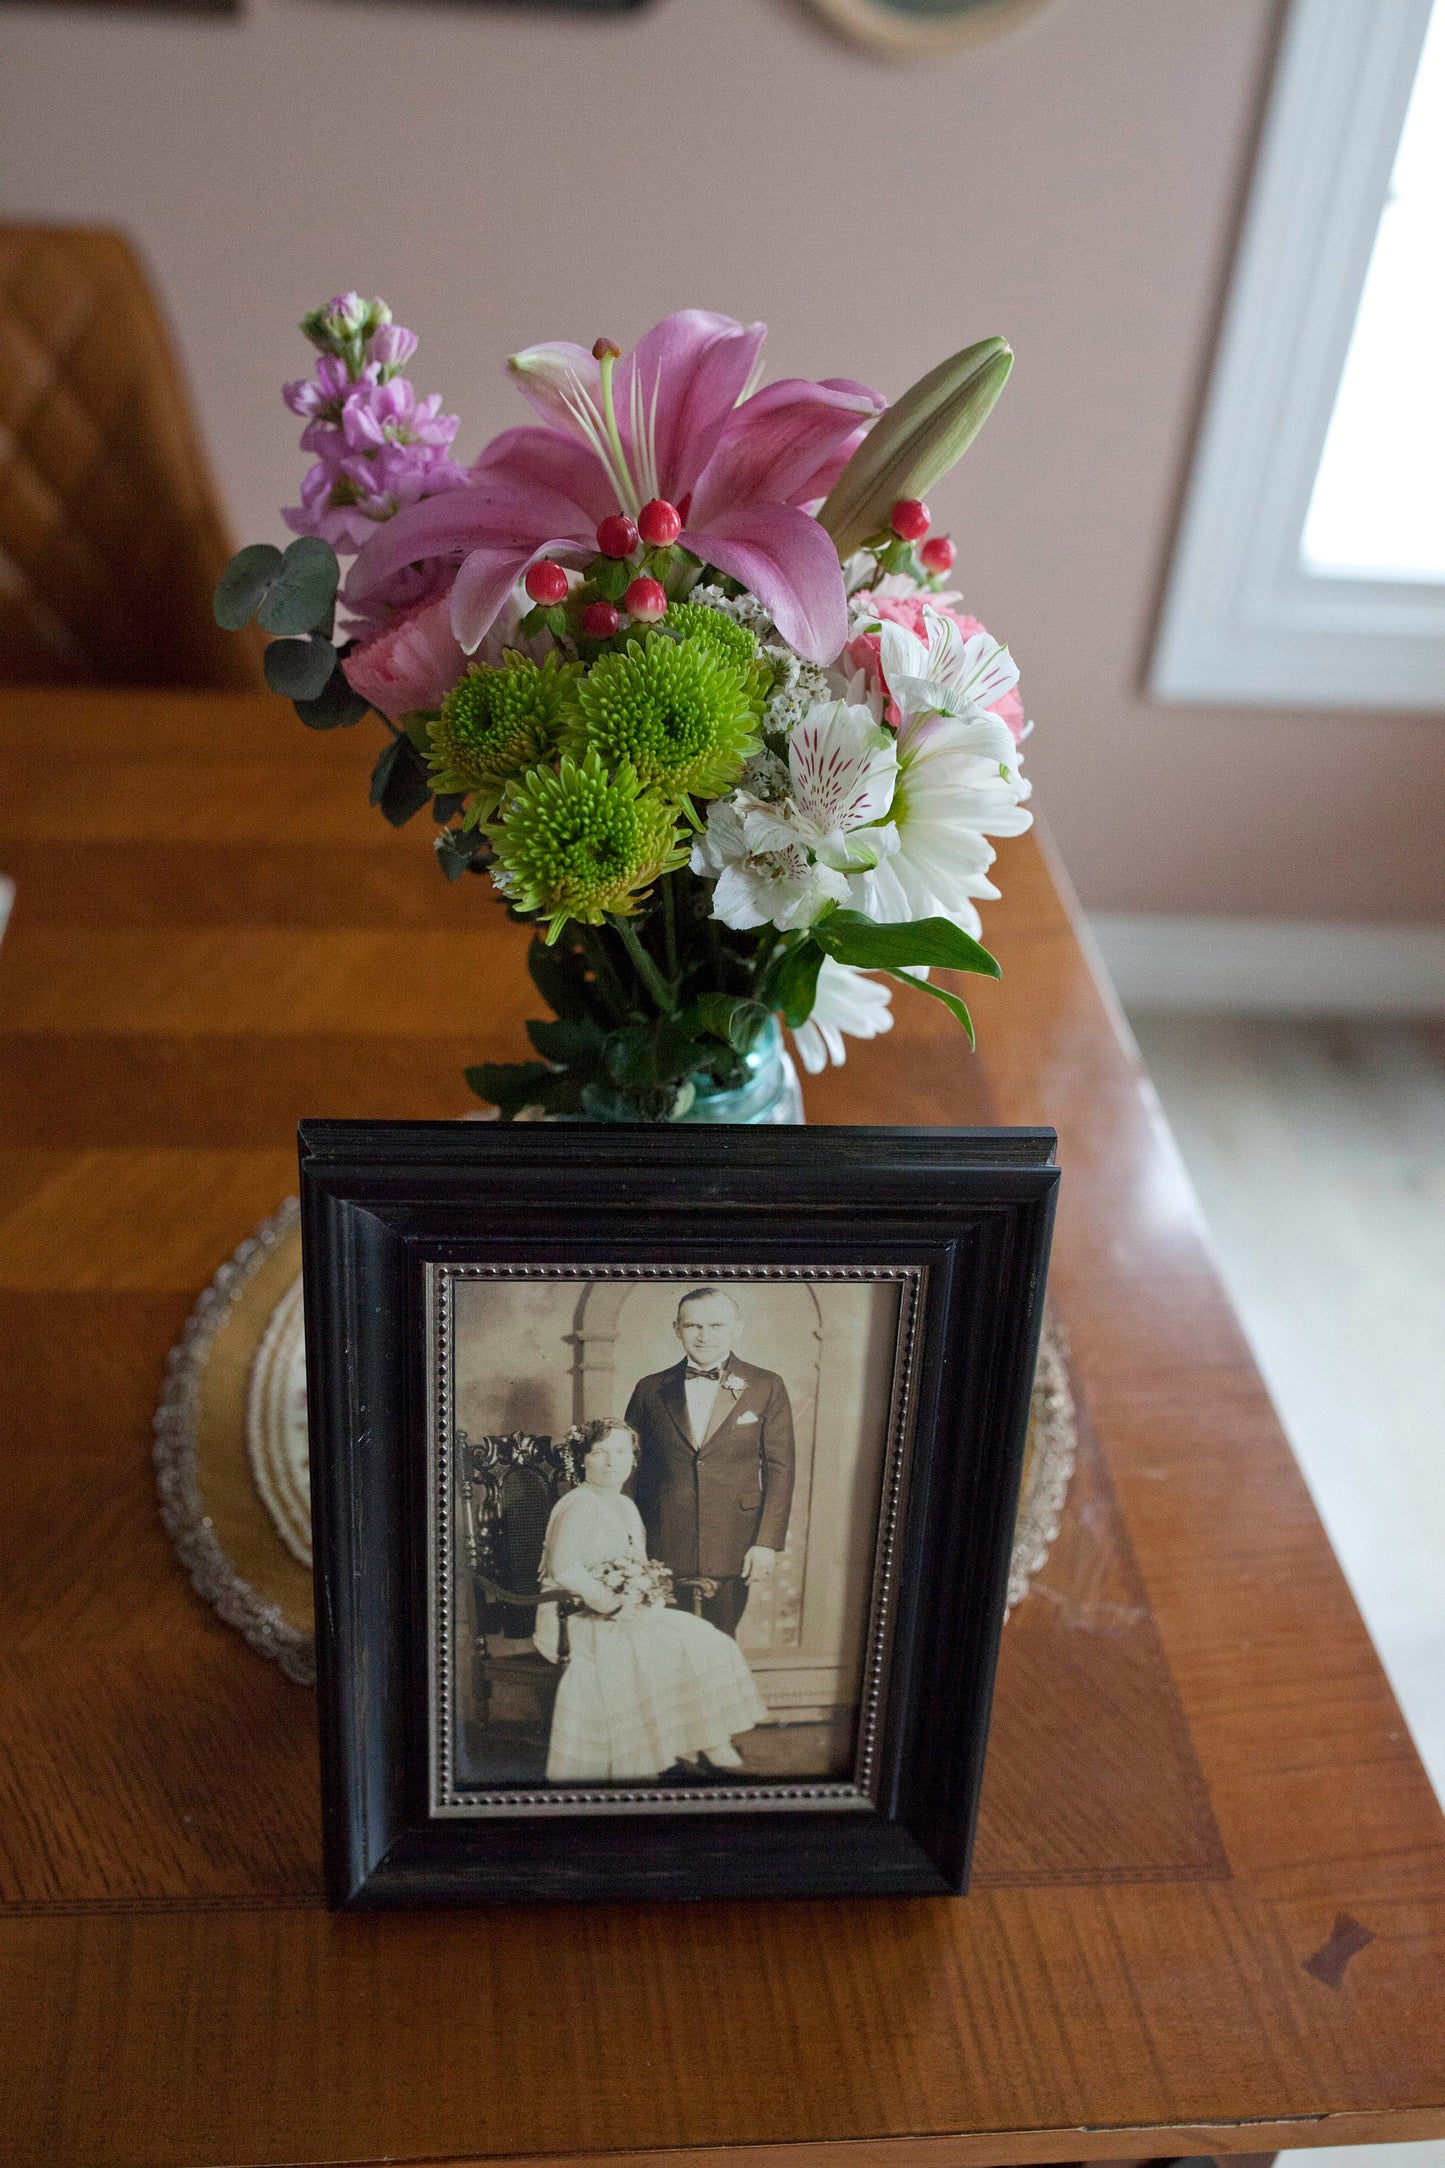 Antique Wedding Photo Framed- Antique Photo - Wedding Portrait